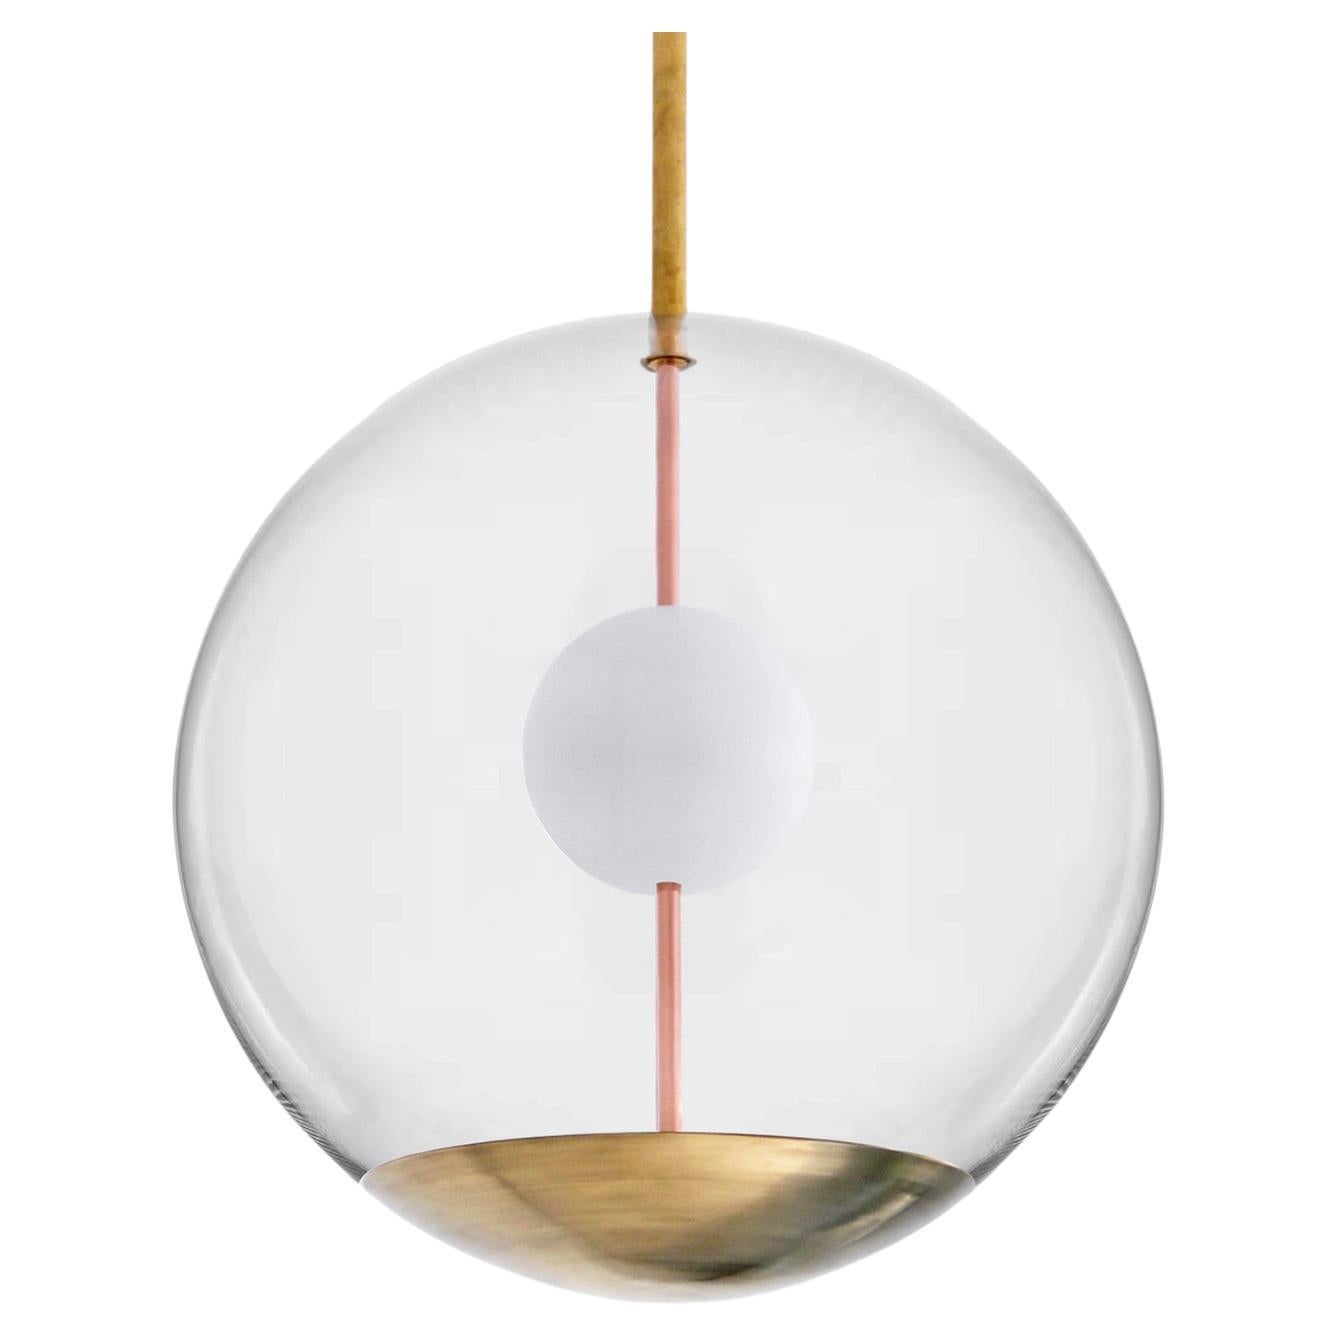 Custom-Made Ball Ceiling Light Made Of Transparent Glass, Brass And Opal Glass